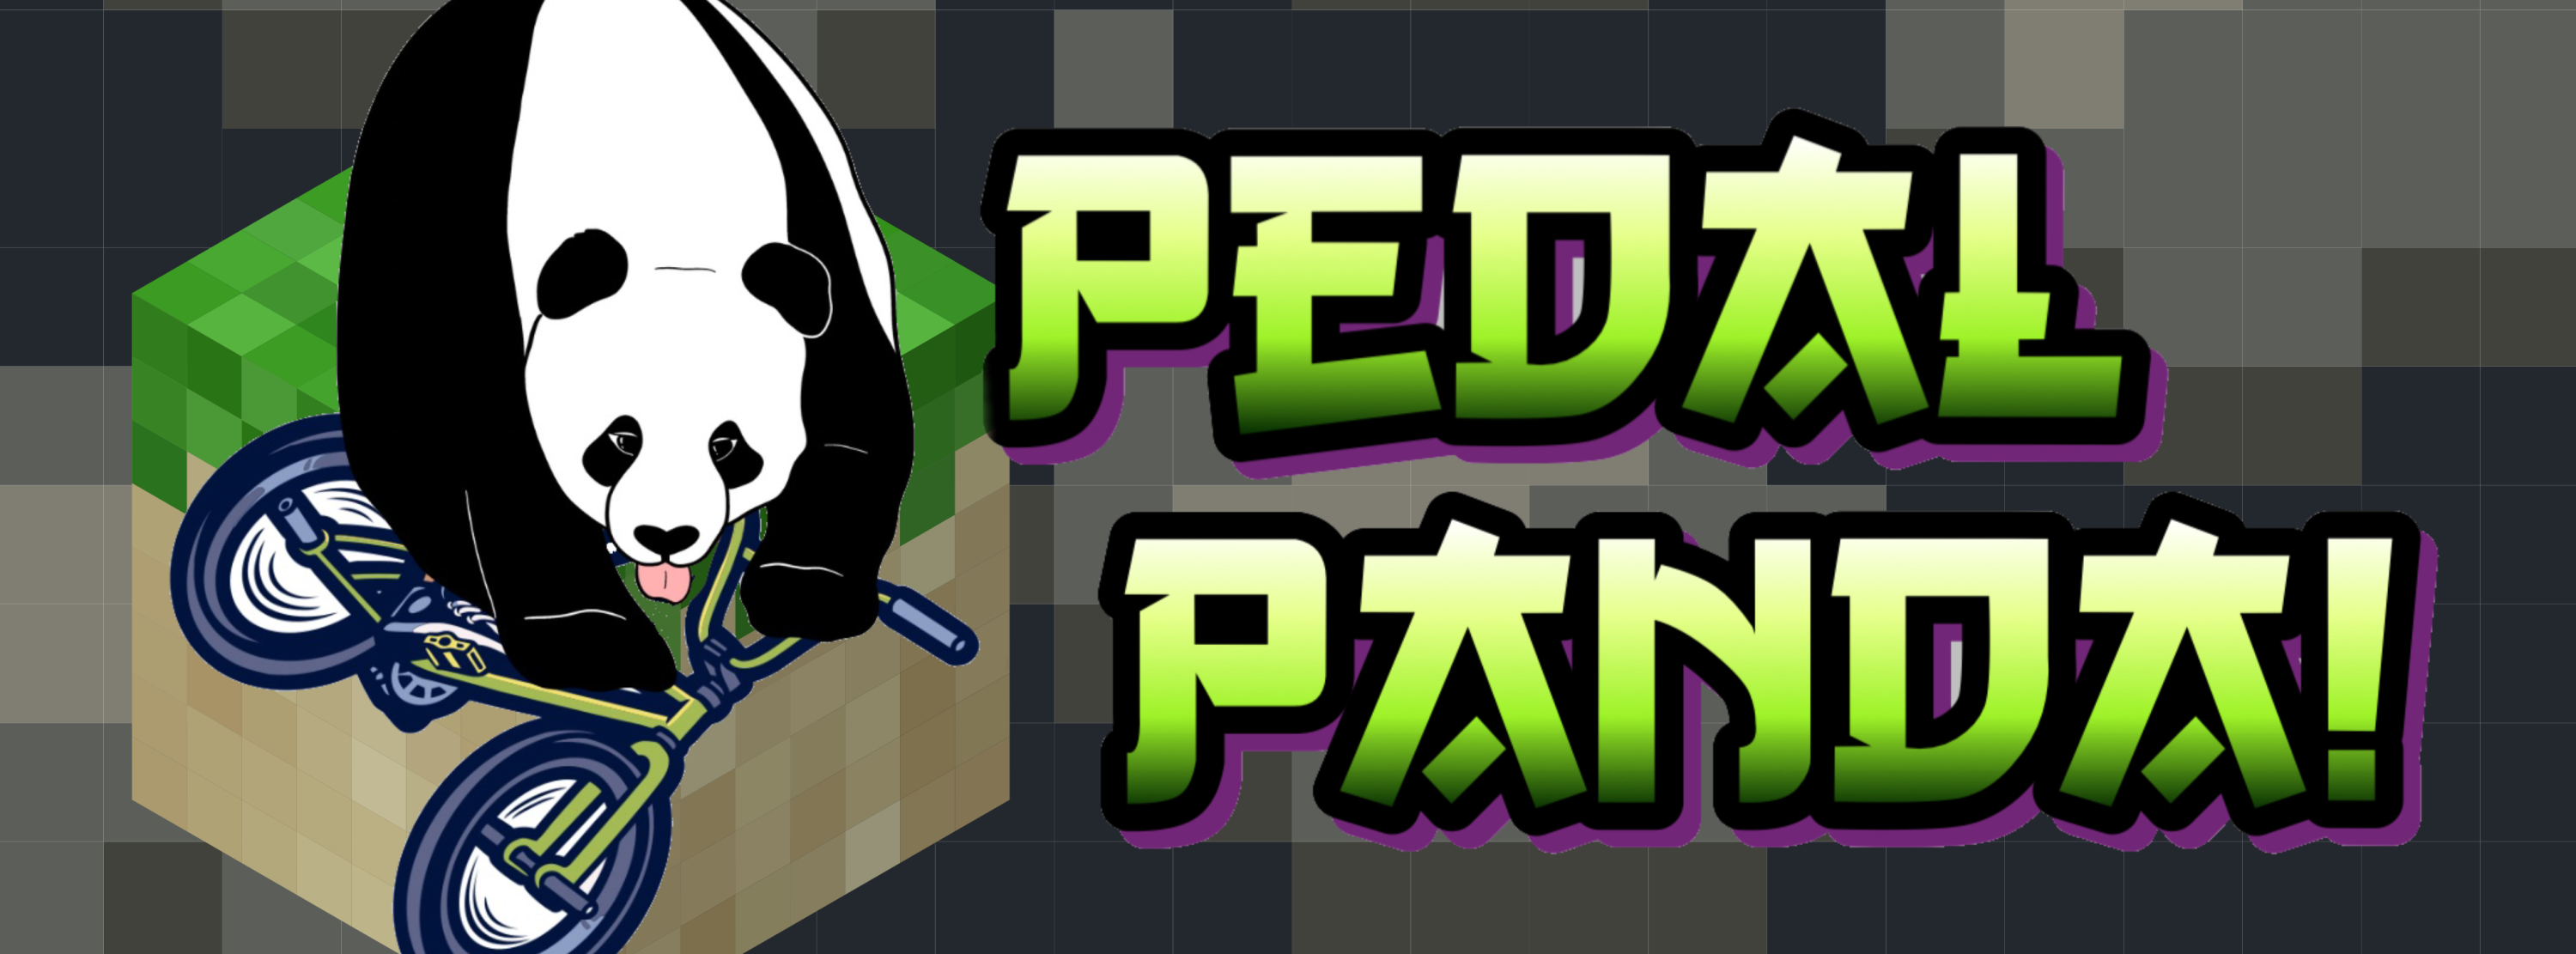 PedalPanda